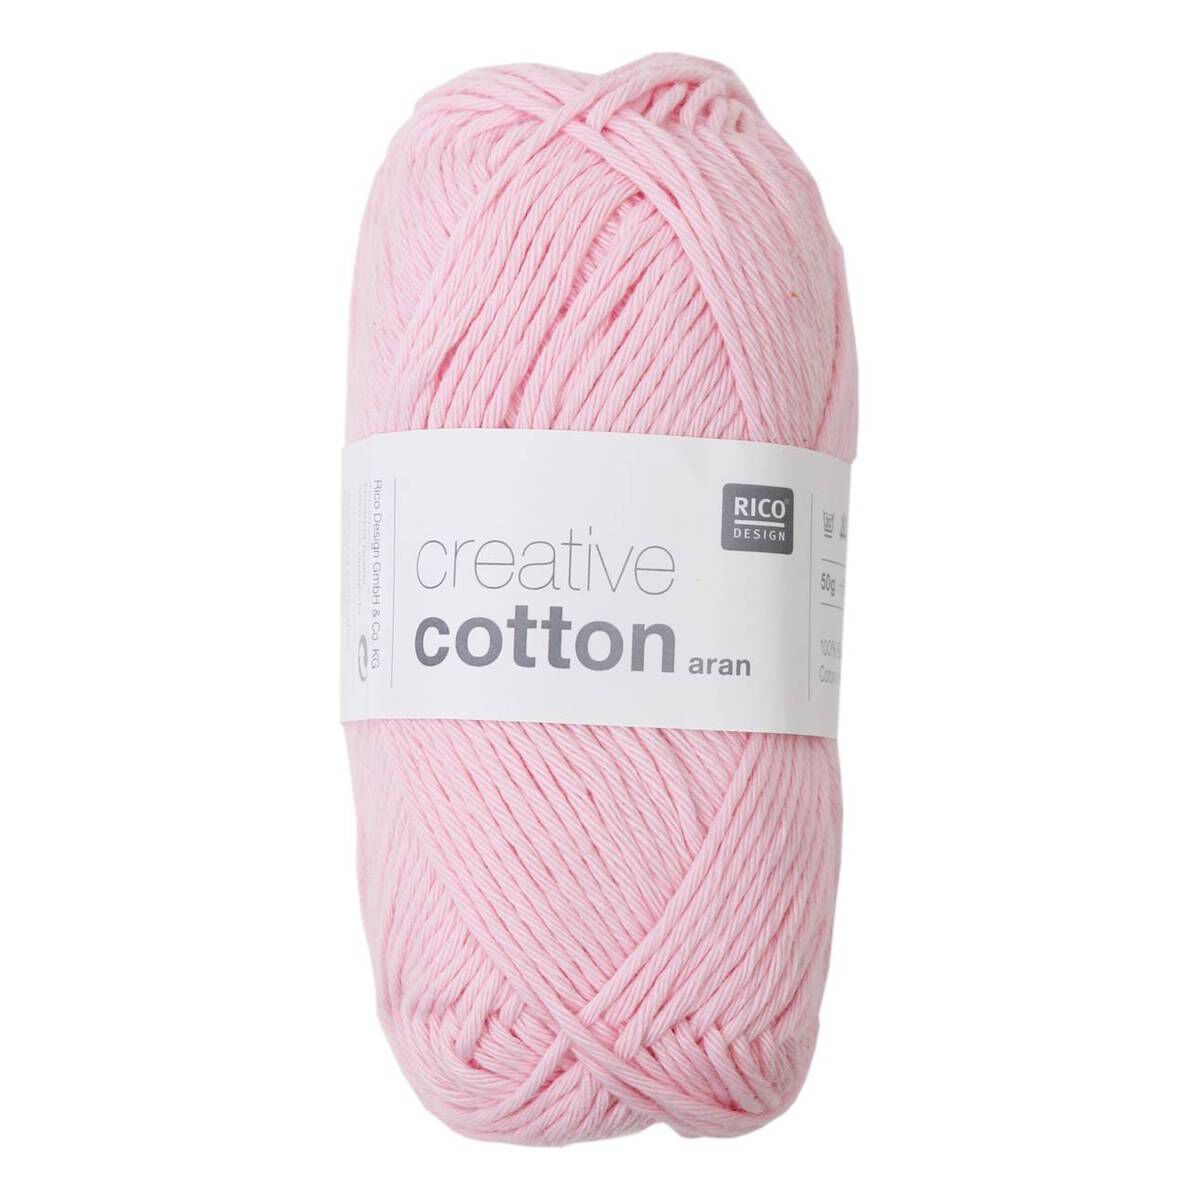 Rico Rose Creative Cotton Aran Yarn 50 g | Hobbycraft